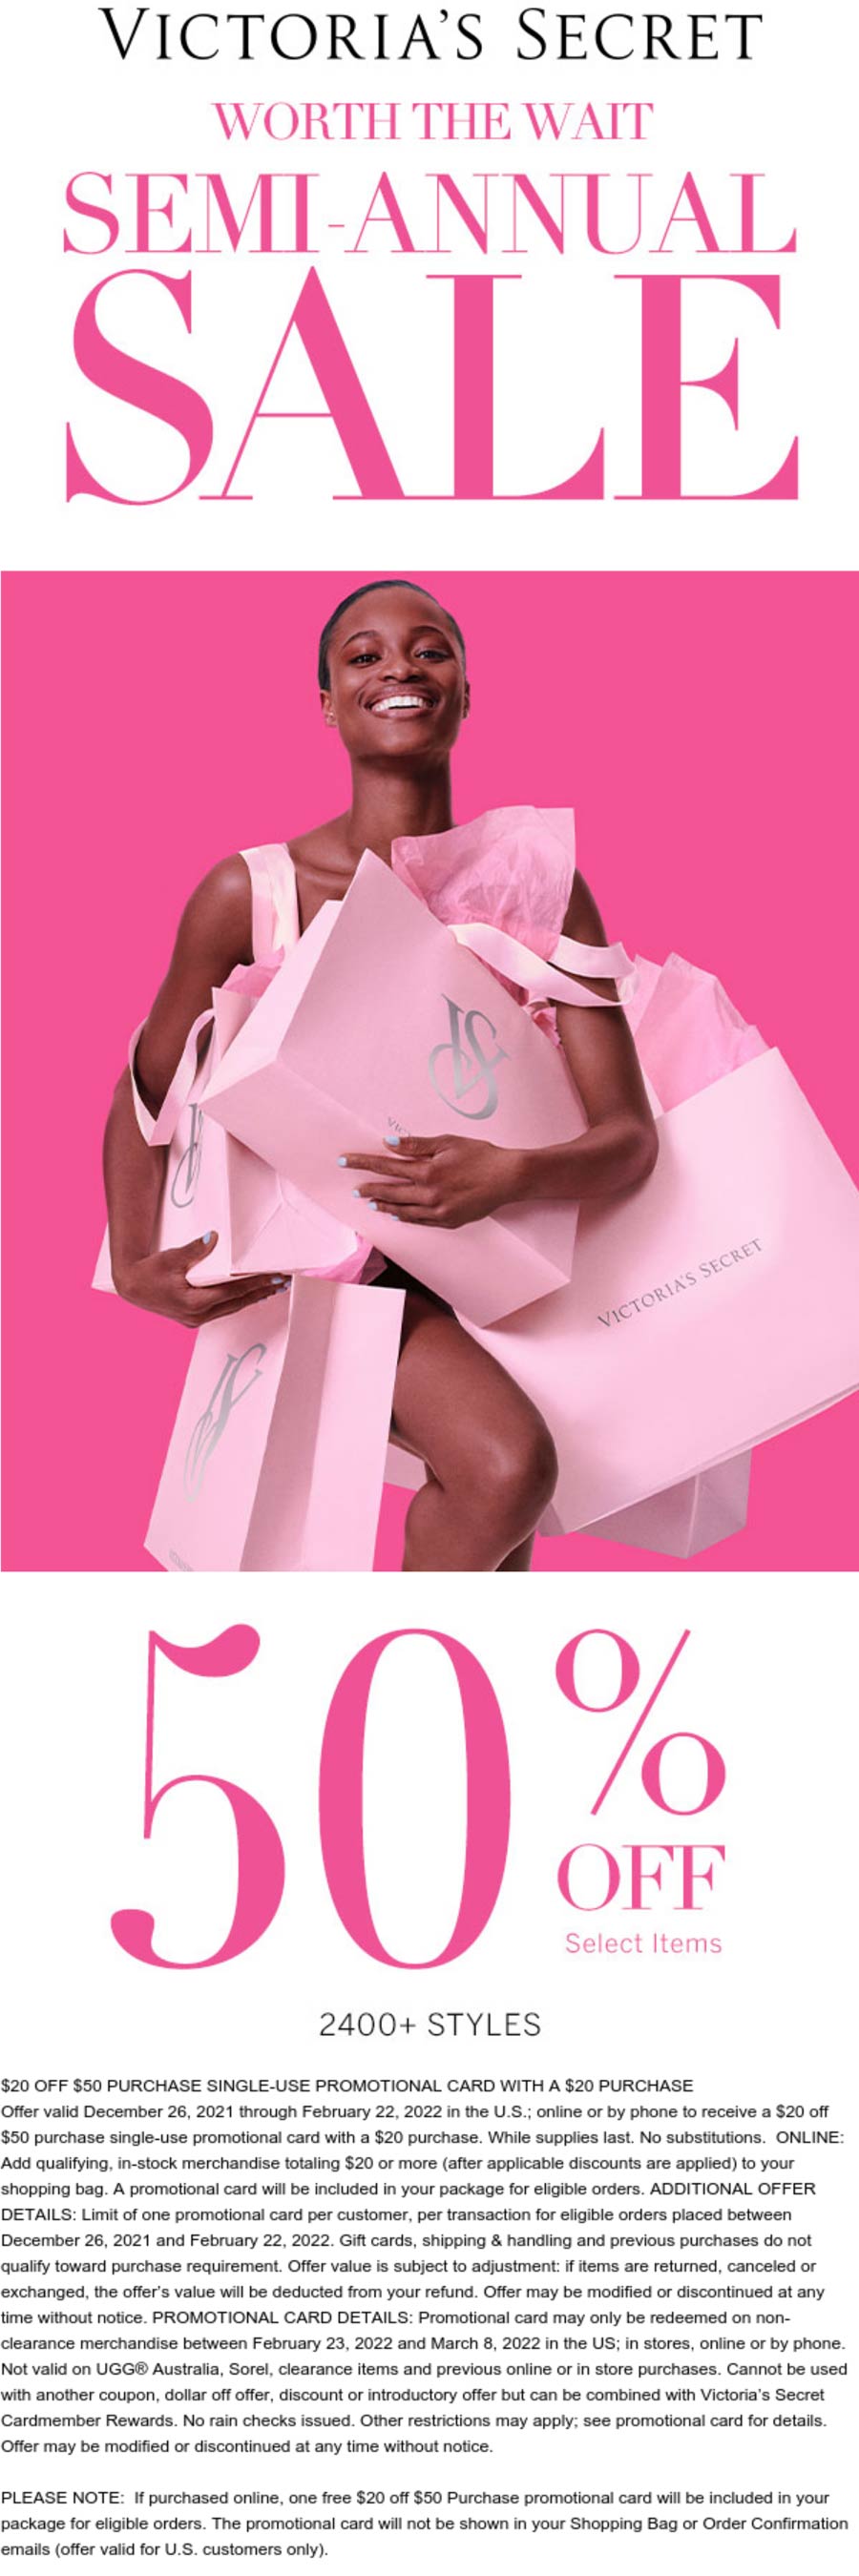 Victorias Secret stores Coupon  50% off semi-annual sale at Victorias Secret, ditto online #victoriassecret 